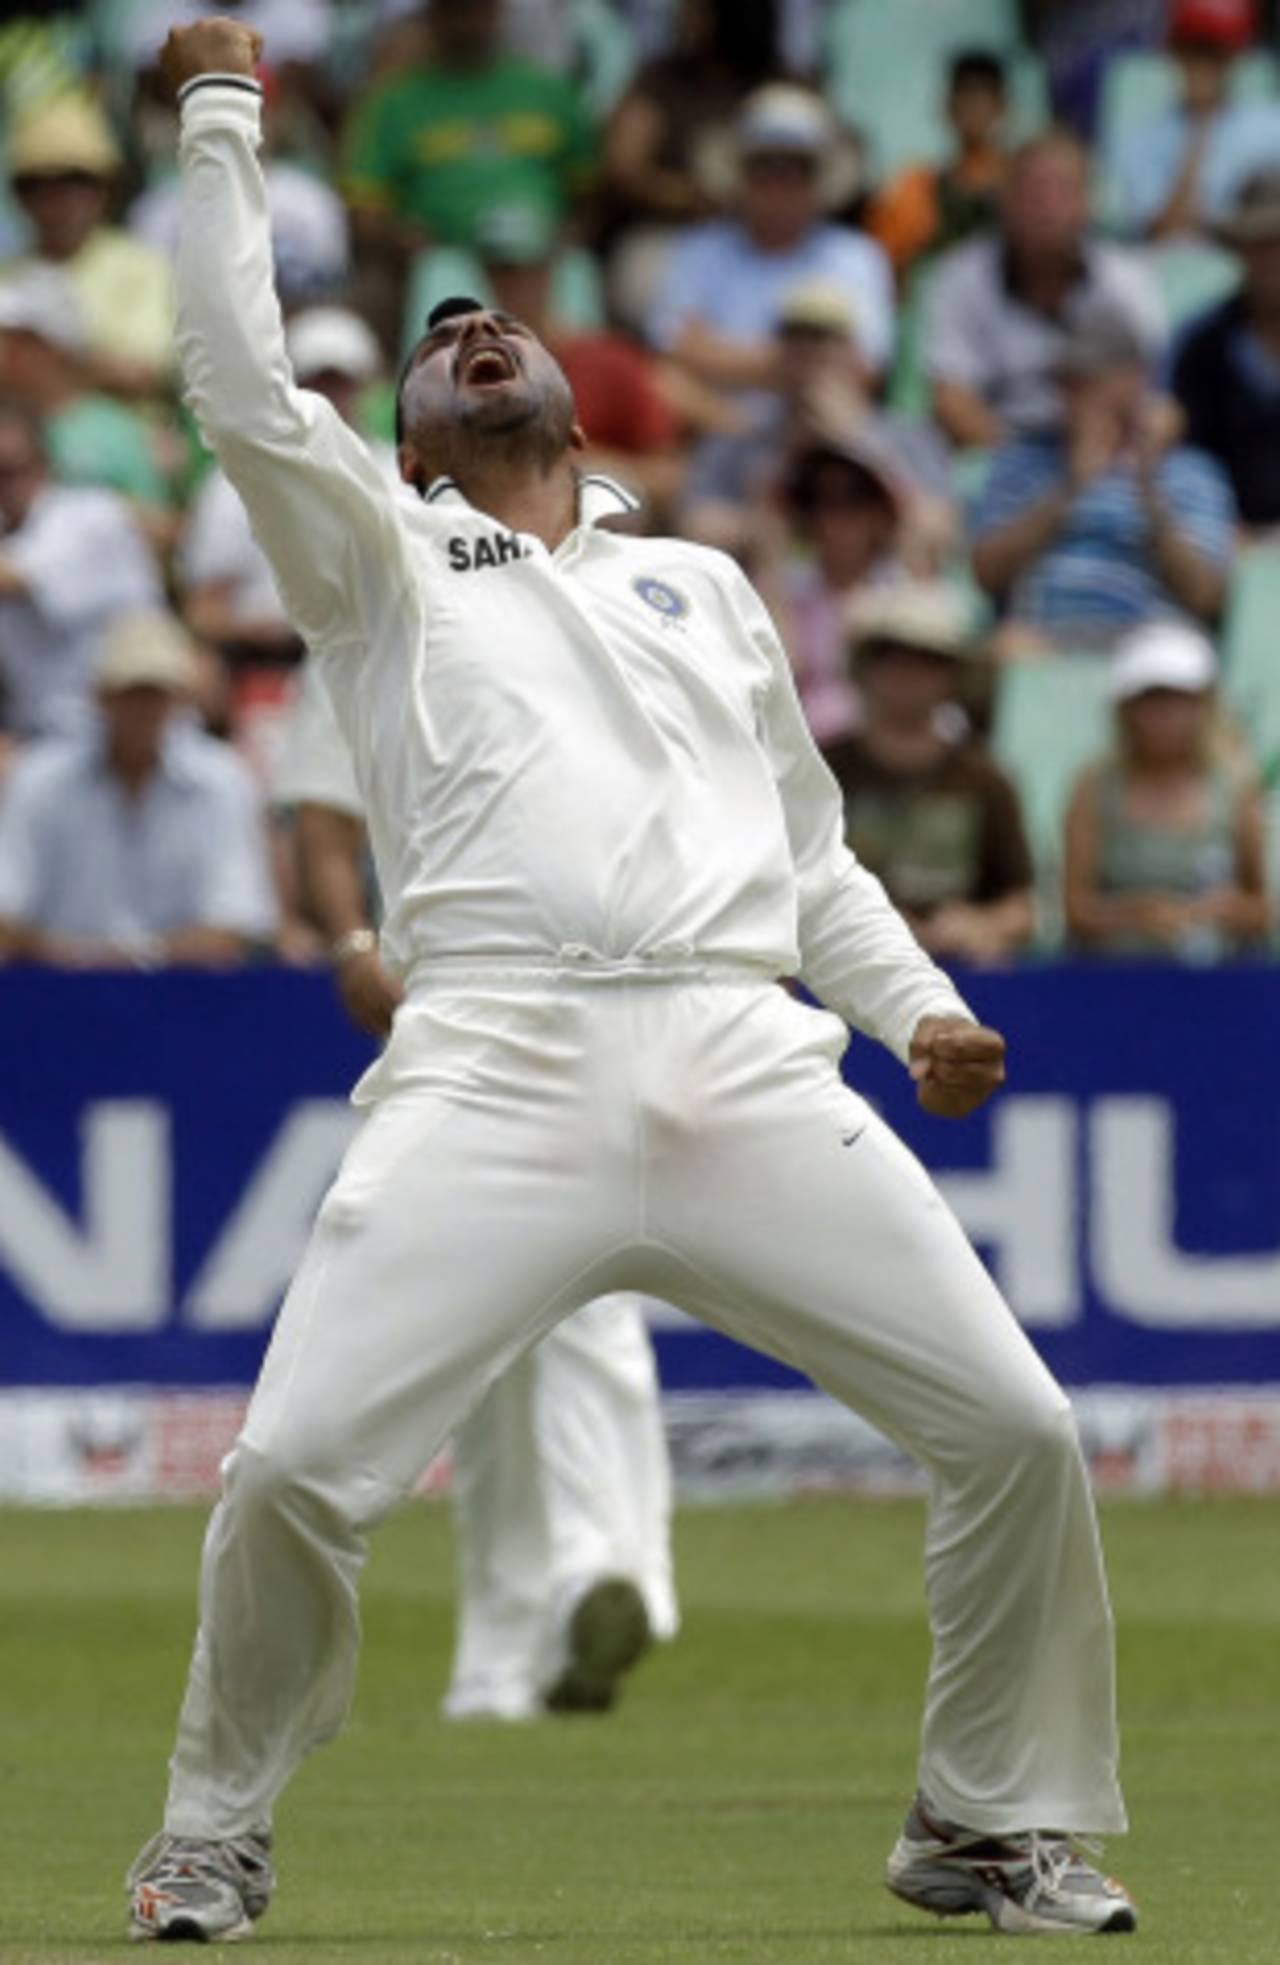 Harbhajan Singh is overjoyed after dismissing Hashim Amla, South Africa v India, 2nd Test, Durban, 2nd day, December 27, 2010 